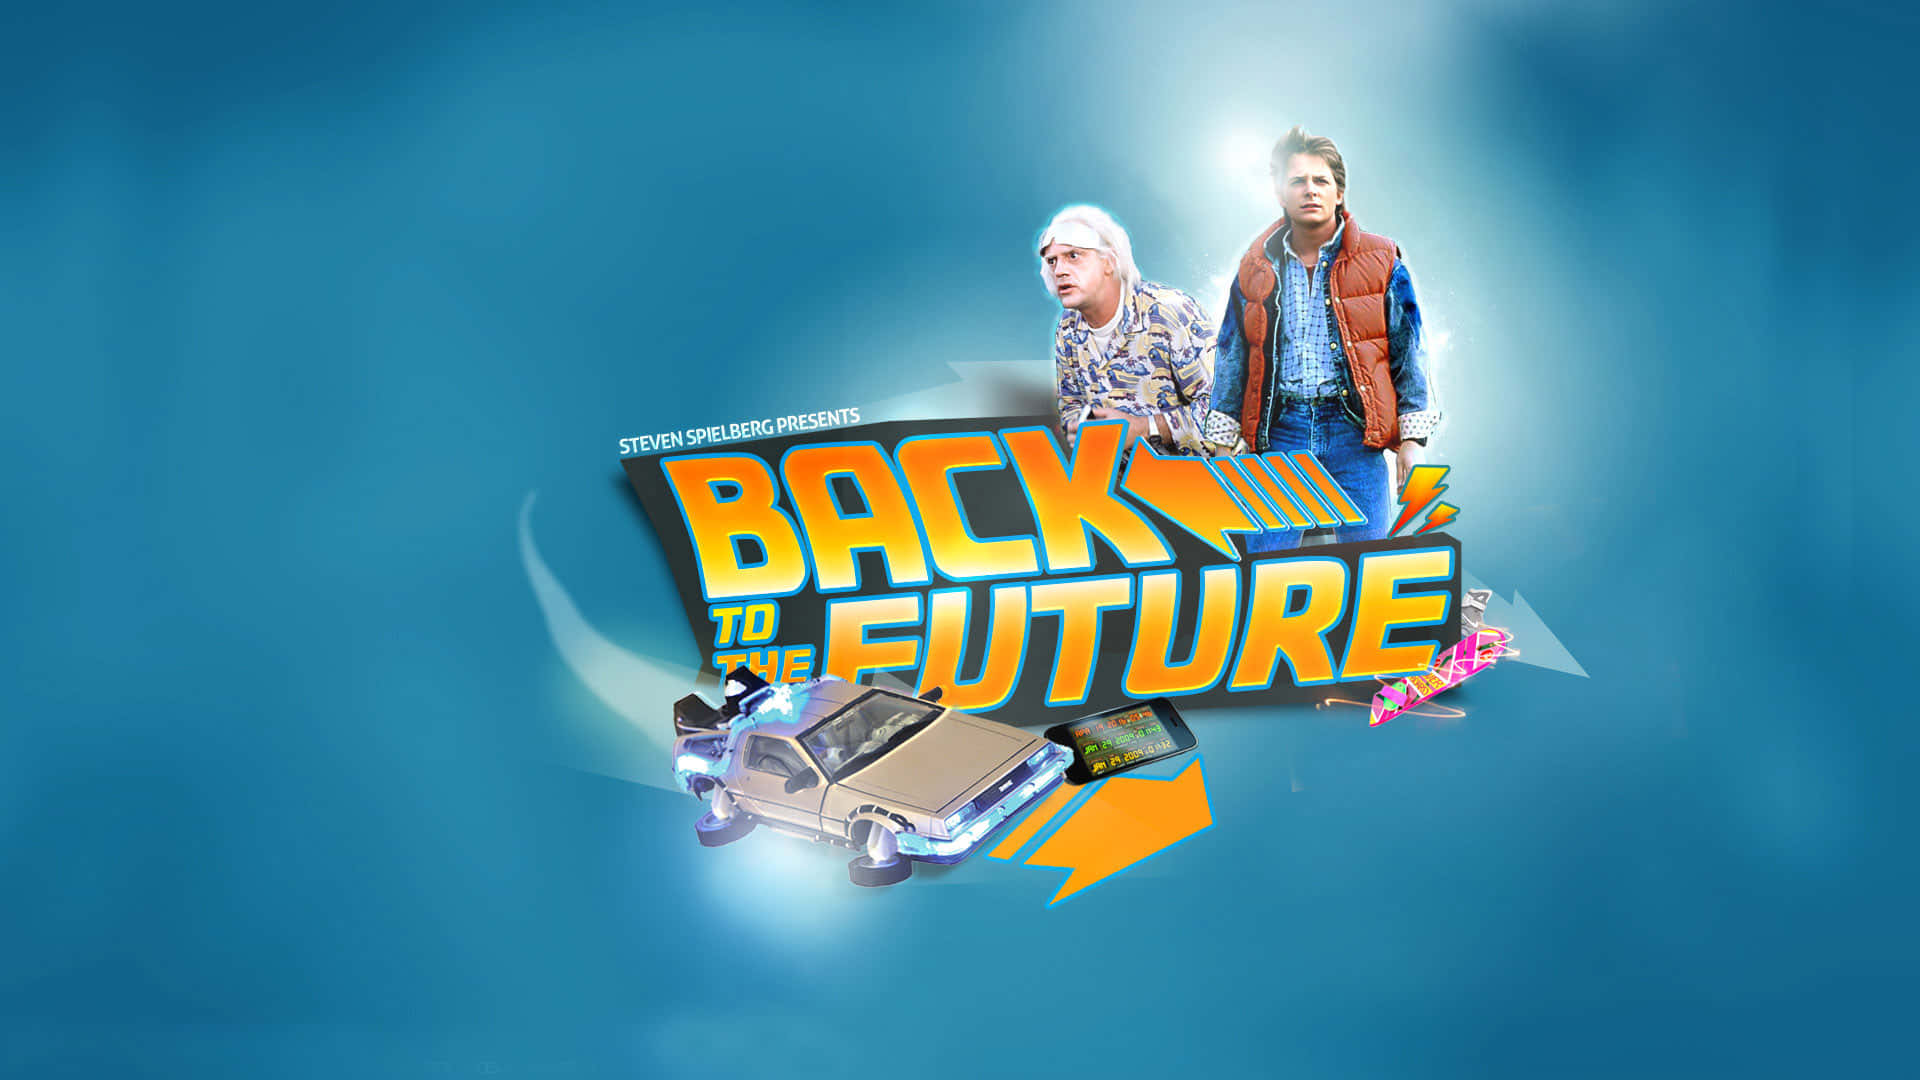 Back to me future. Назад в будущее. Назад в будущее картинки. Обои на рабочий стол назад в будущее. Назад в будущее заставка.